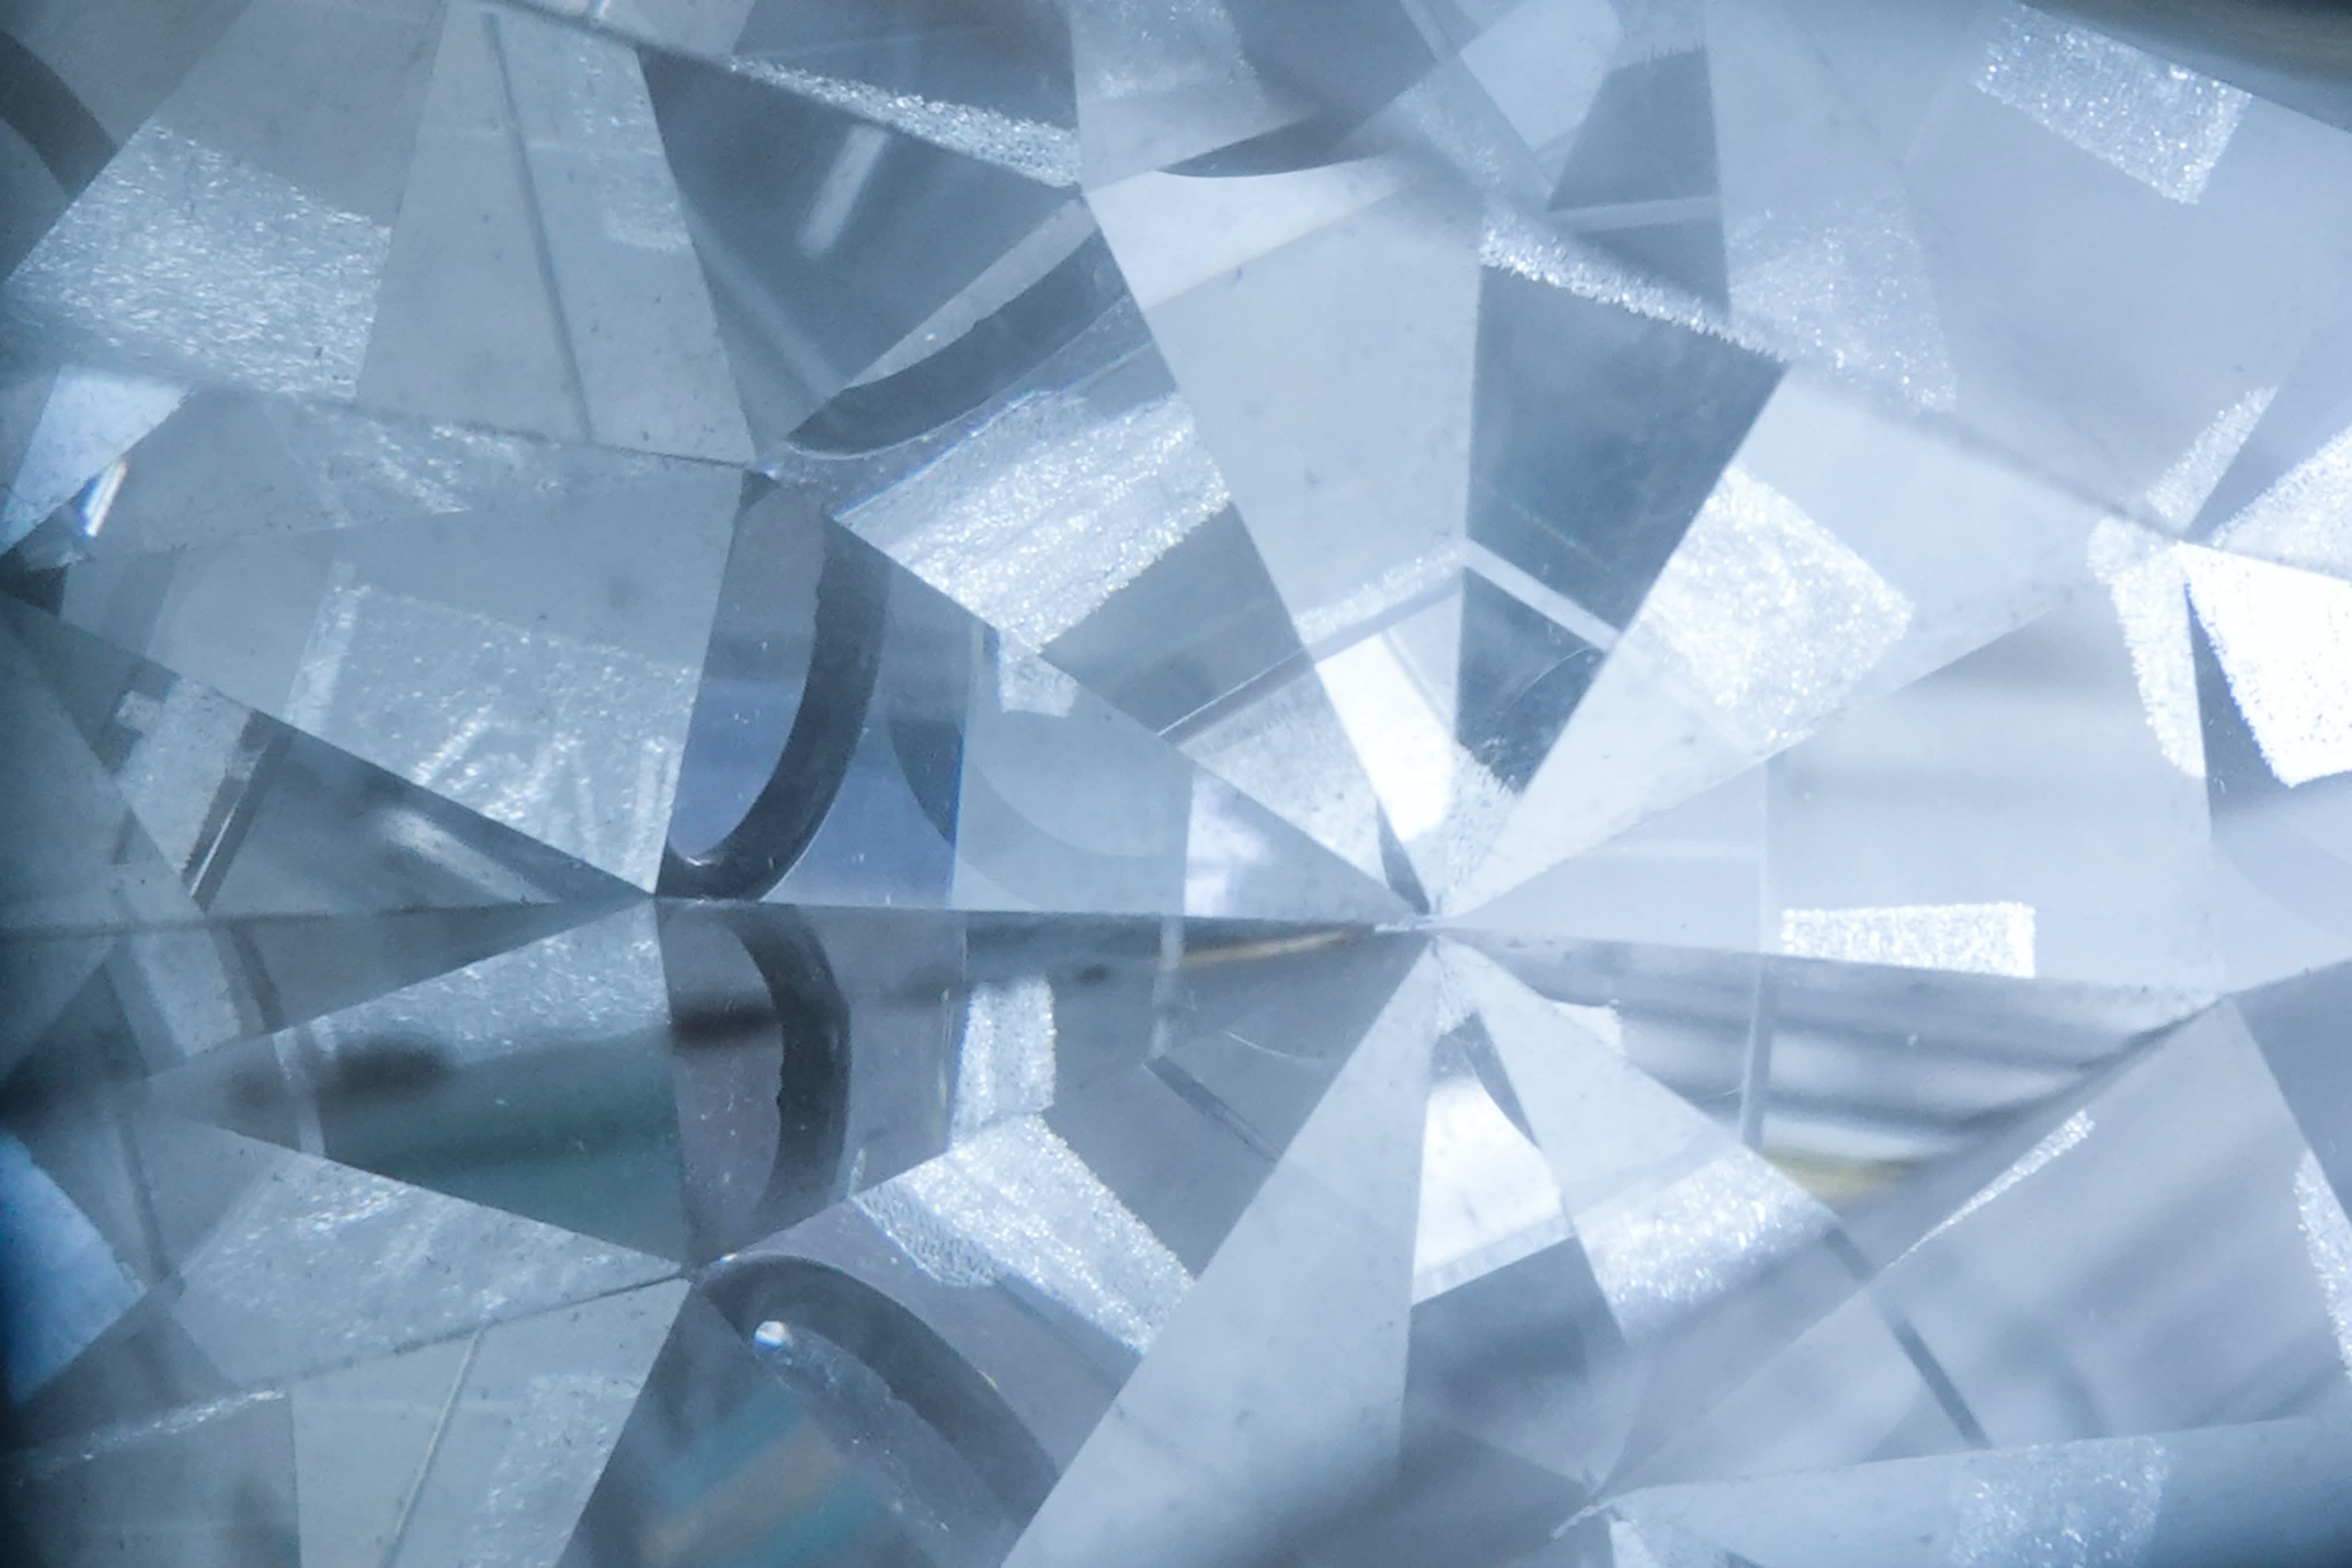 Researchers achieve data storage breakthrough using diamond defects